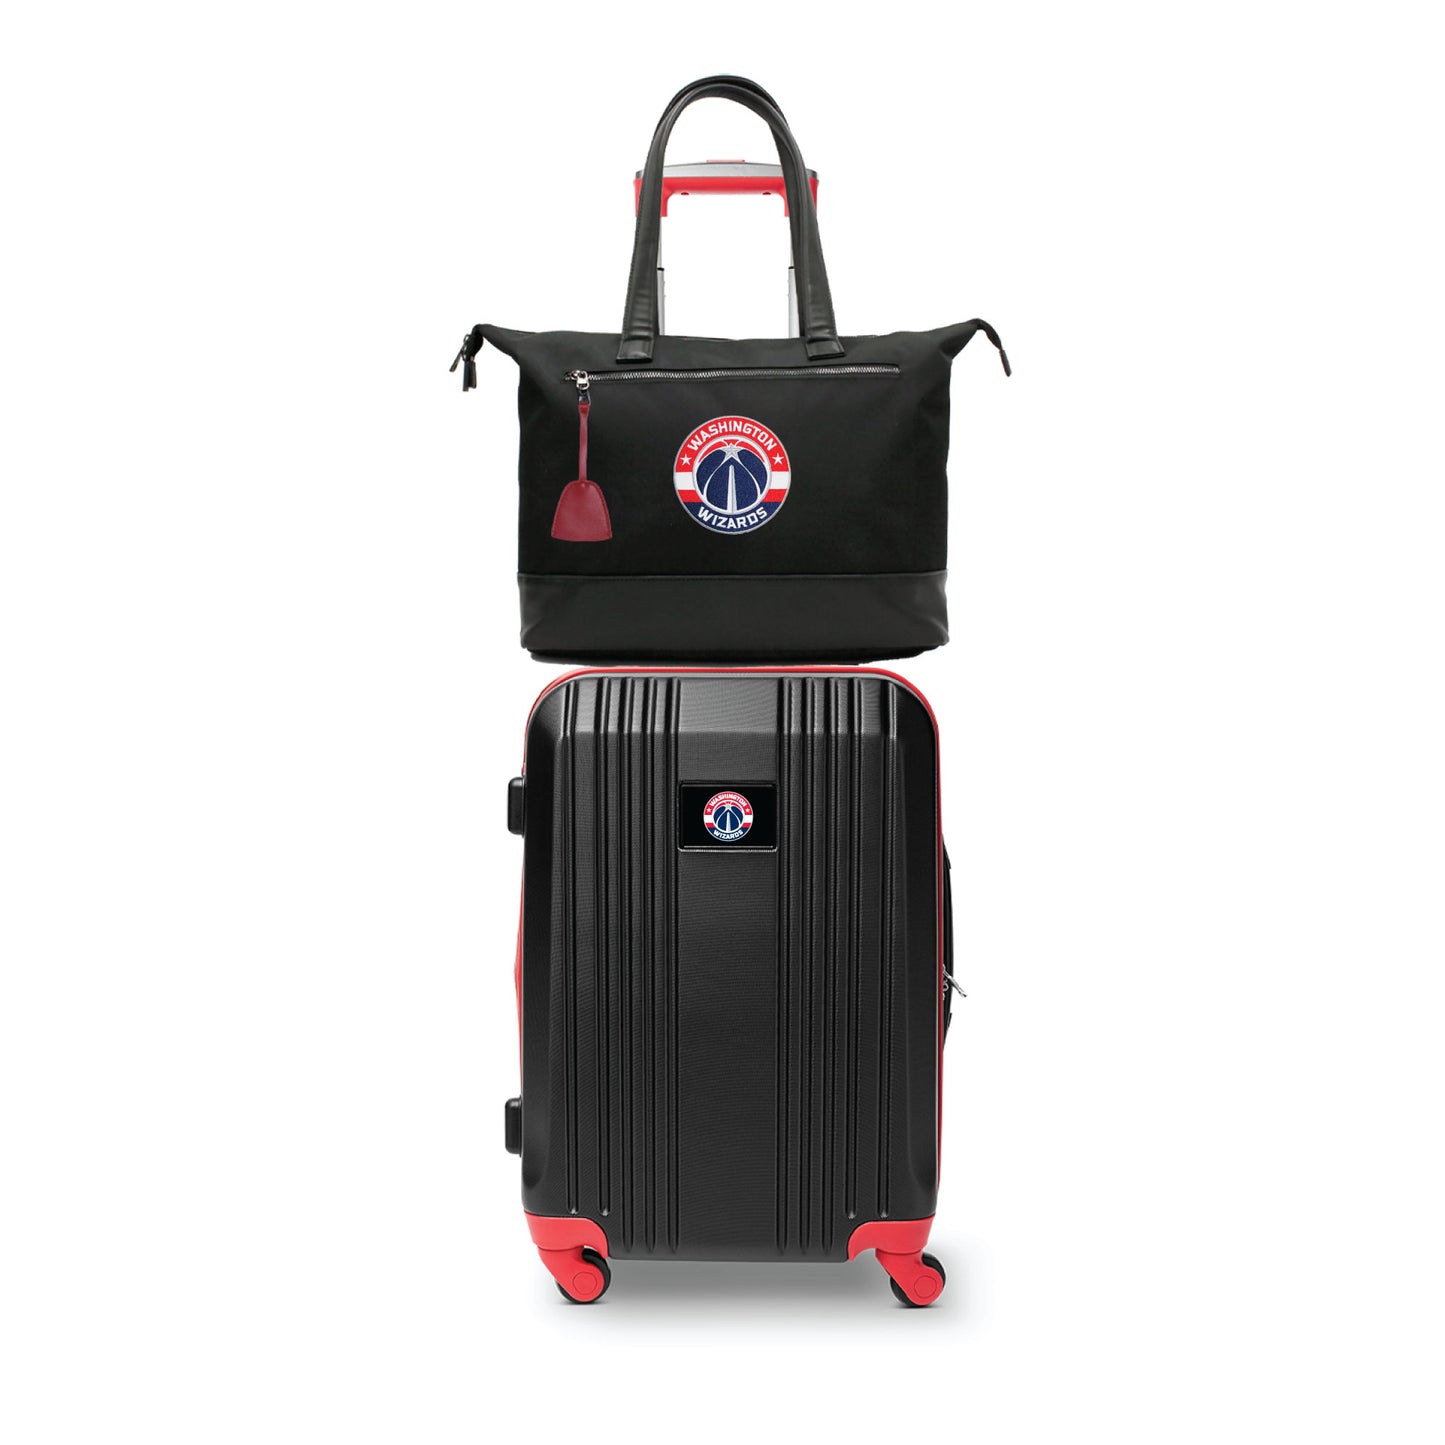 Washington Wizards Premium Laptop Tote Bag and Luggage Set